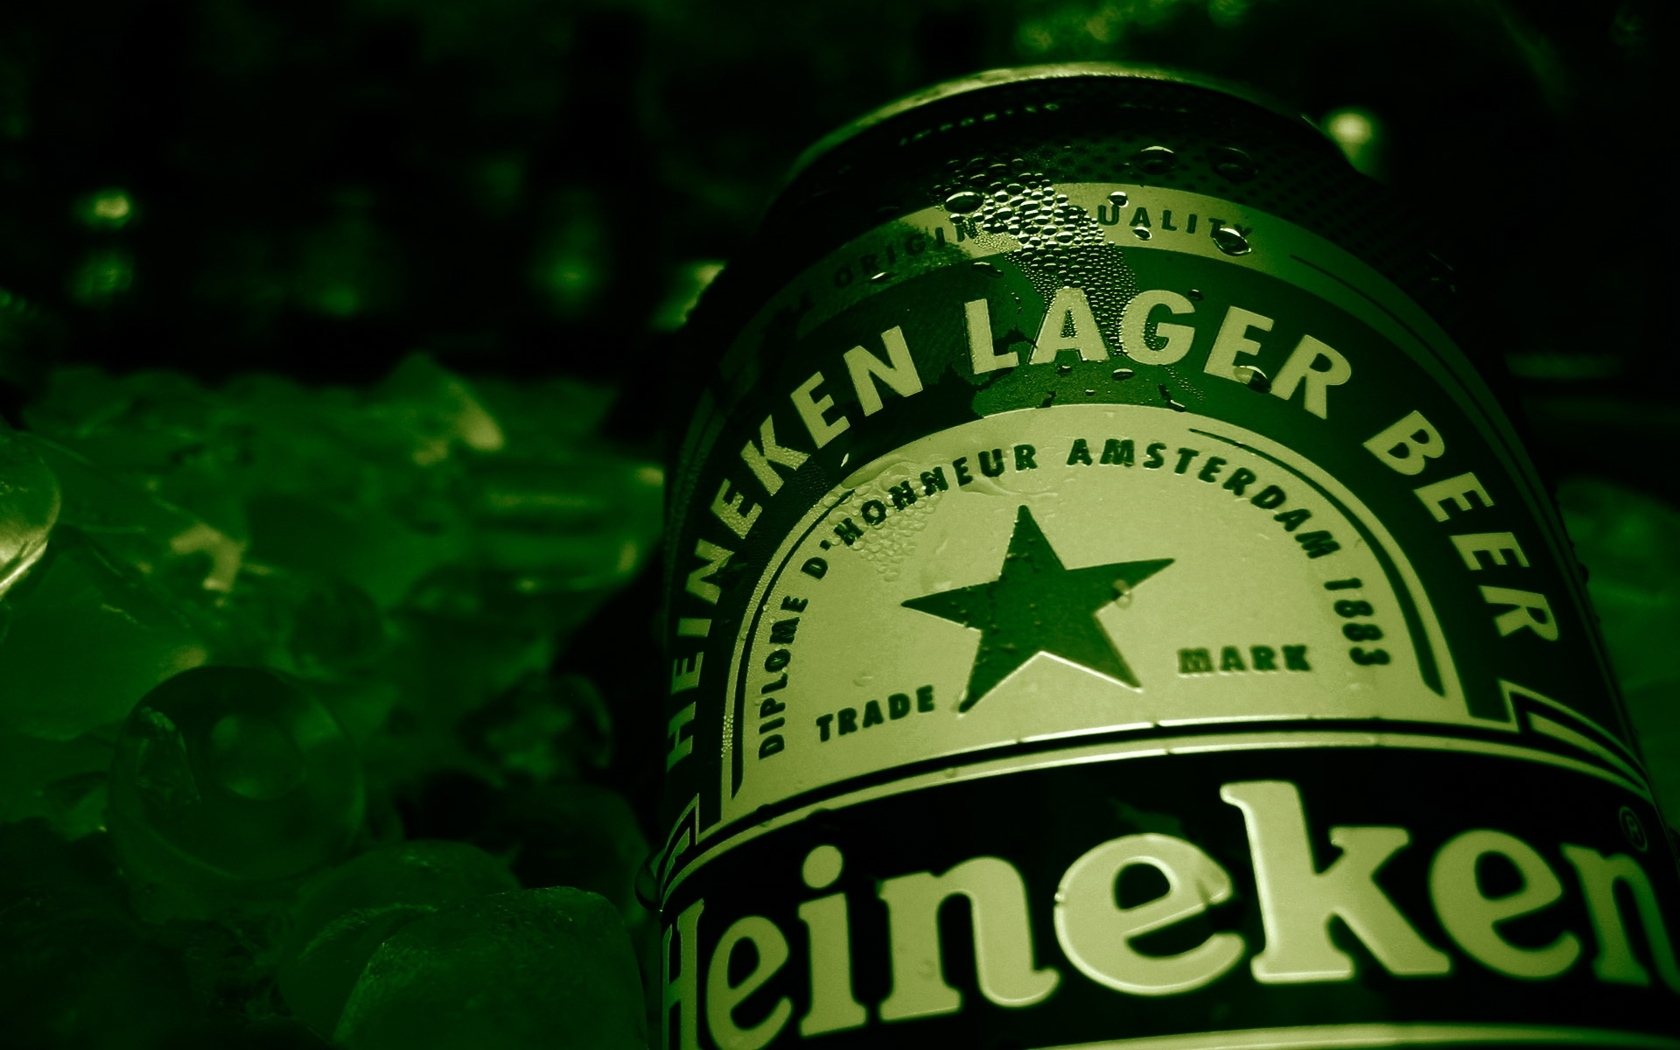 Man Made Heineken HD Wallpaper | Background Image